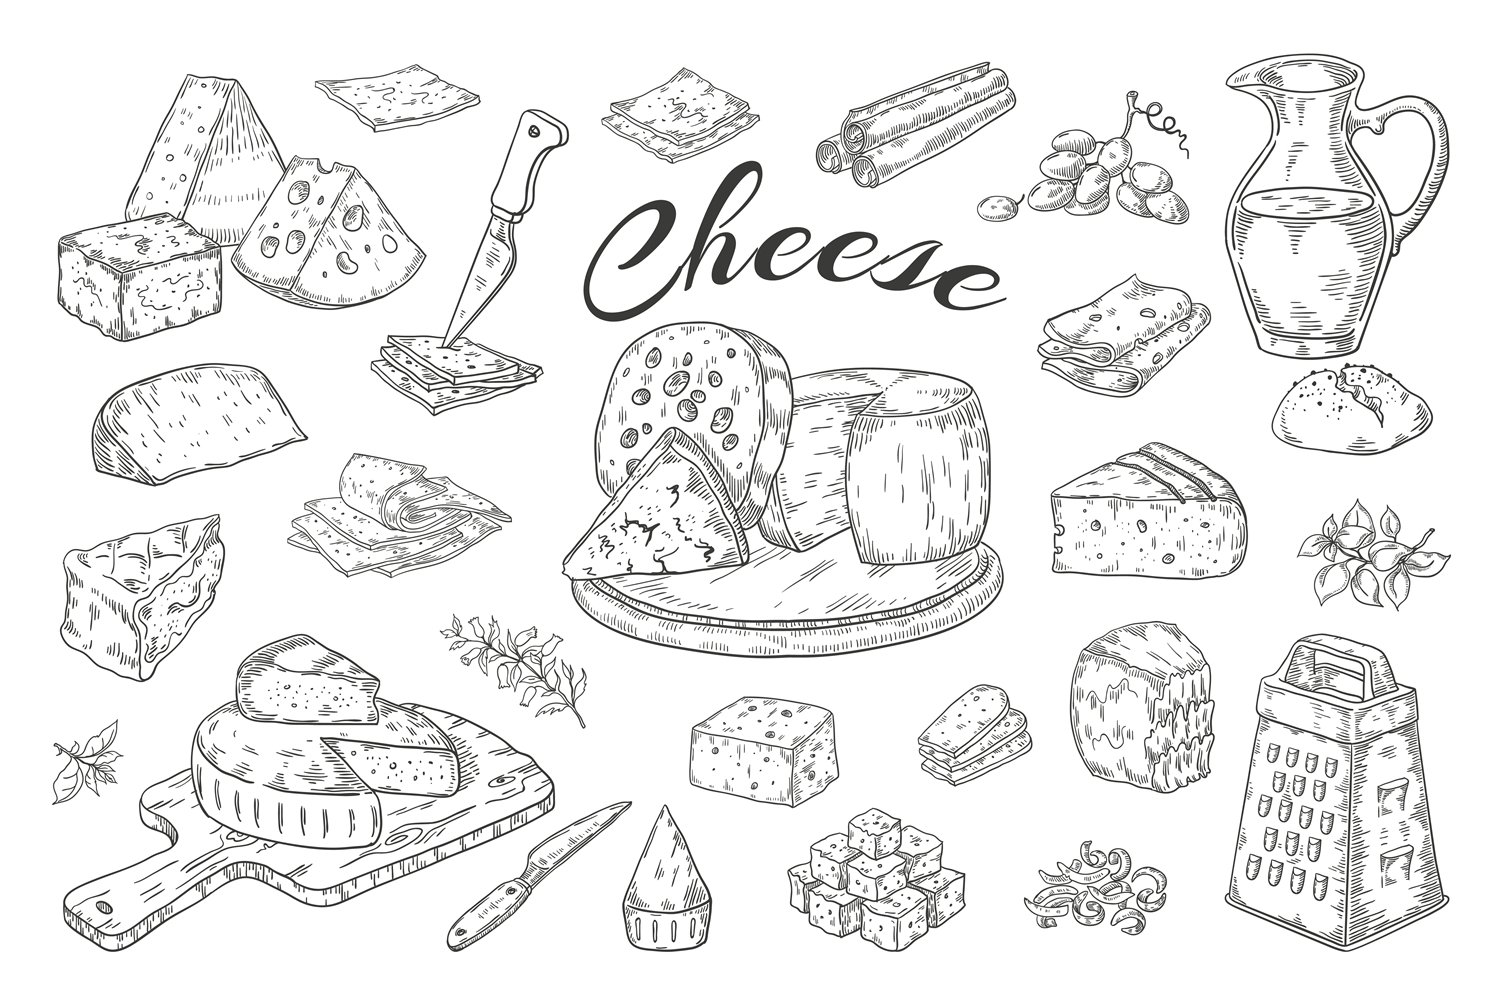 Wonderful sketches of hard cheeses hand-drawn.